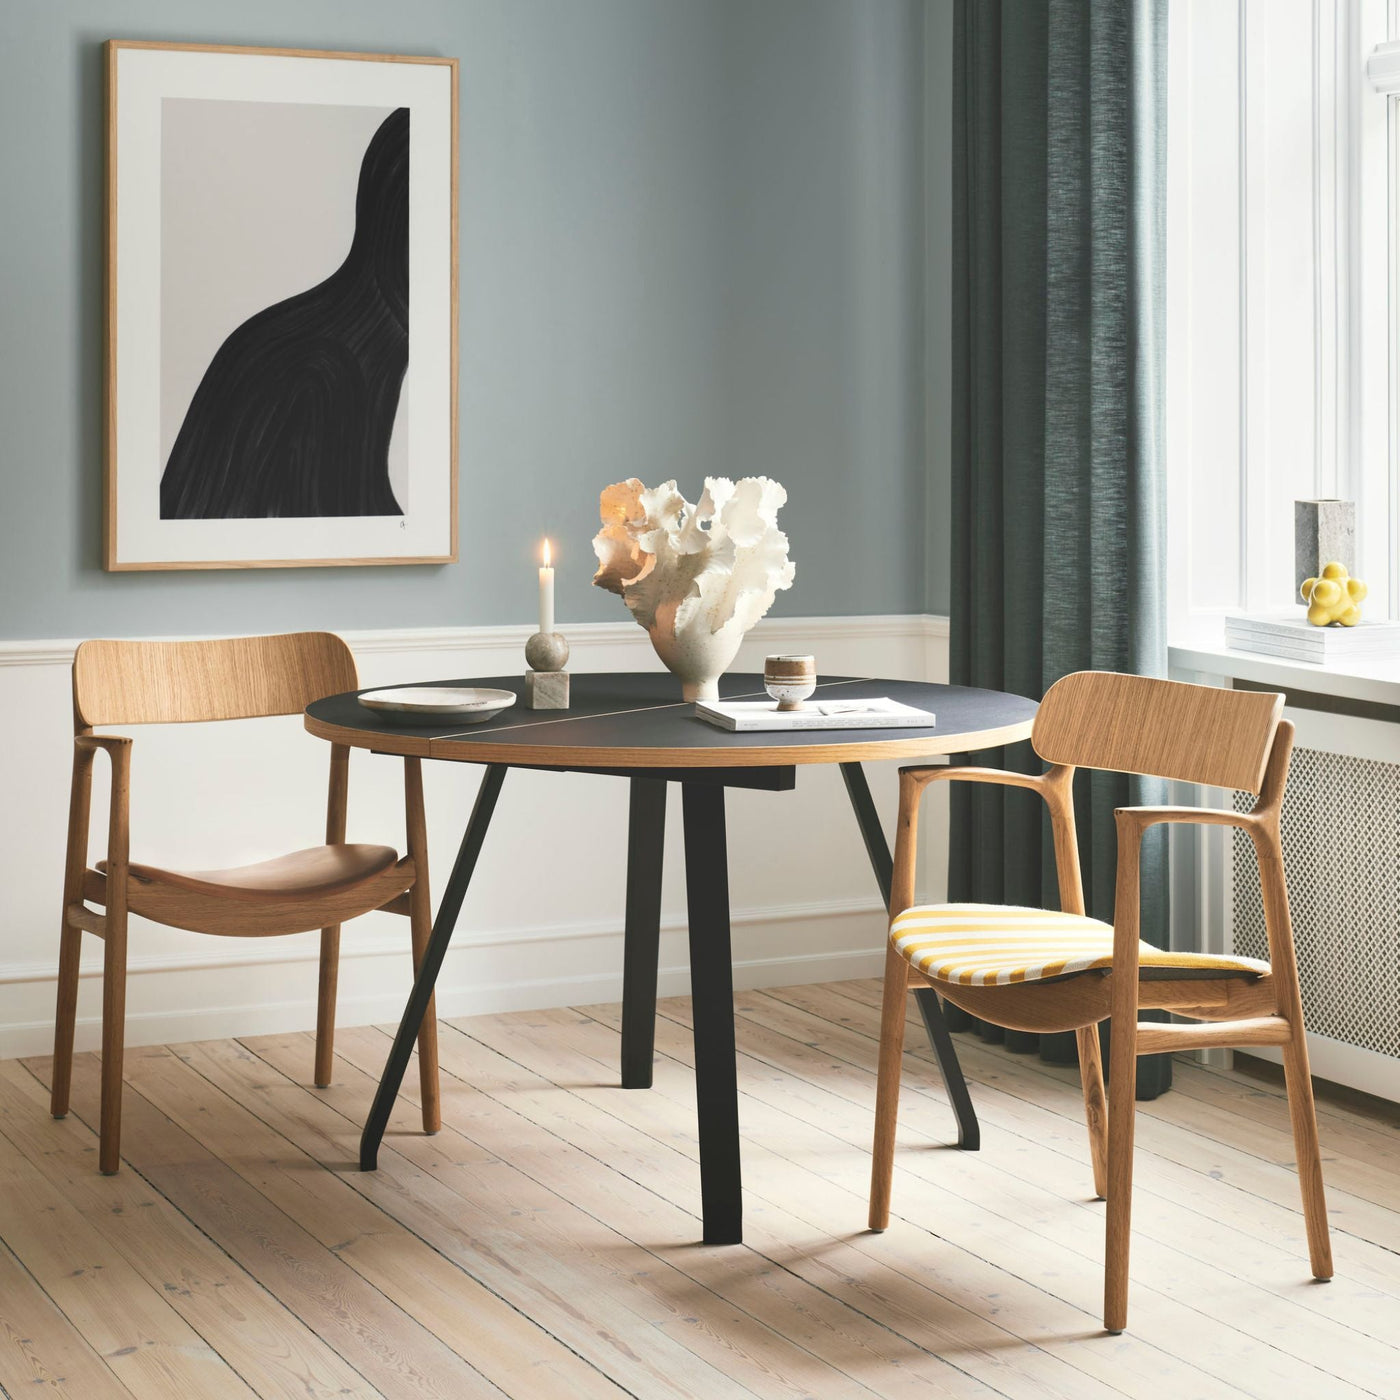 Bent Hansen Asger Chairs with Round Table in Copenhagen Apartment